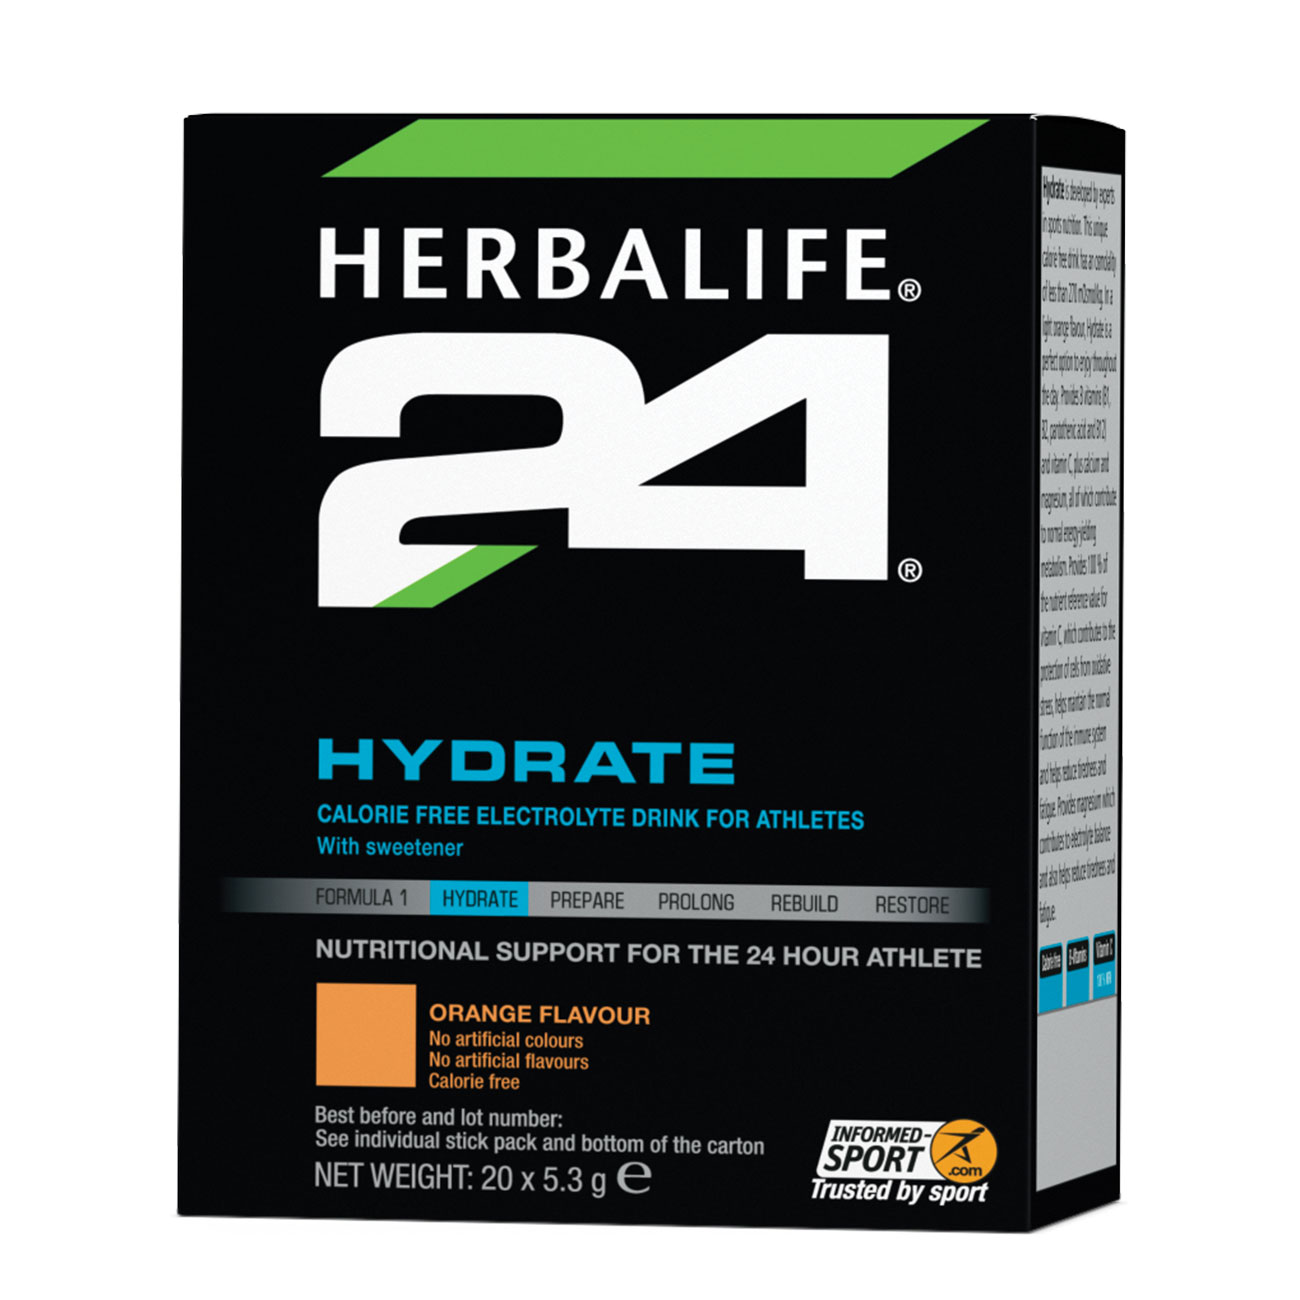 Herbalife24® Hydrate Electrolyte Drink Orange product shot.